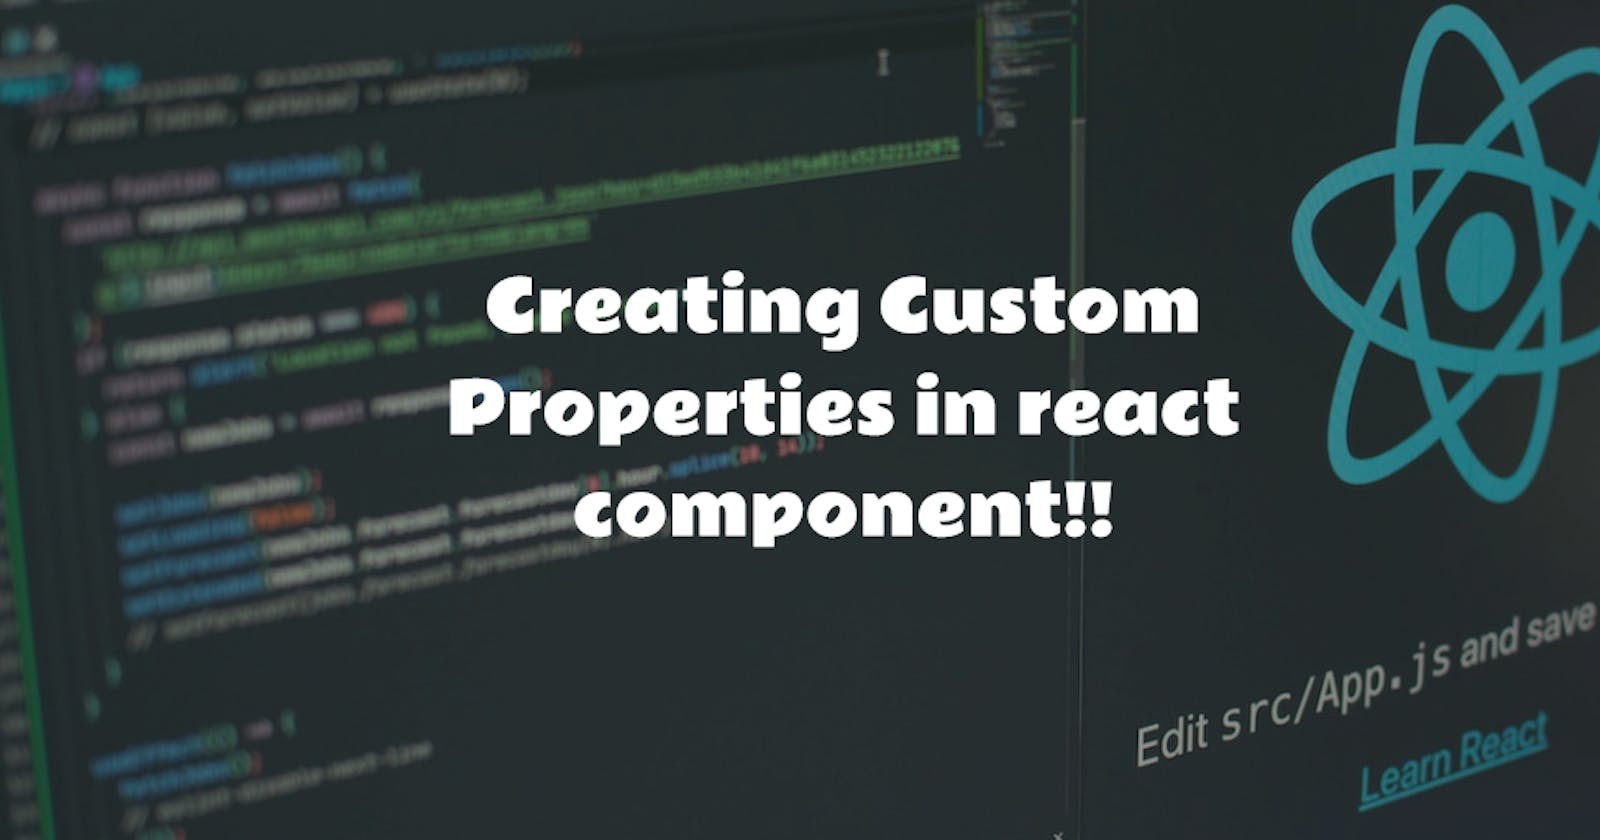 Creating custom properties in react component